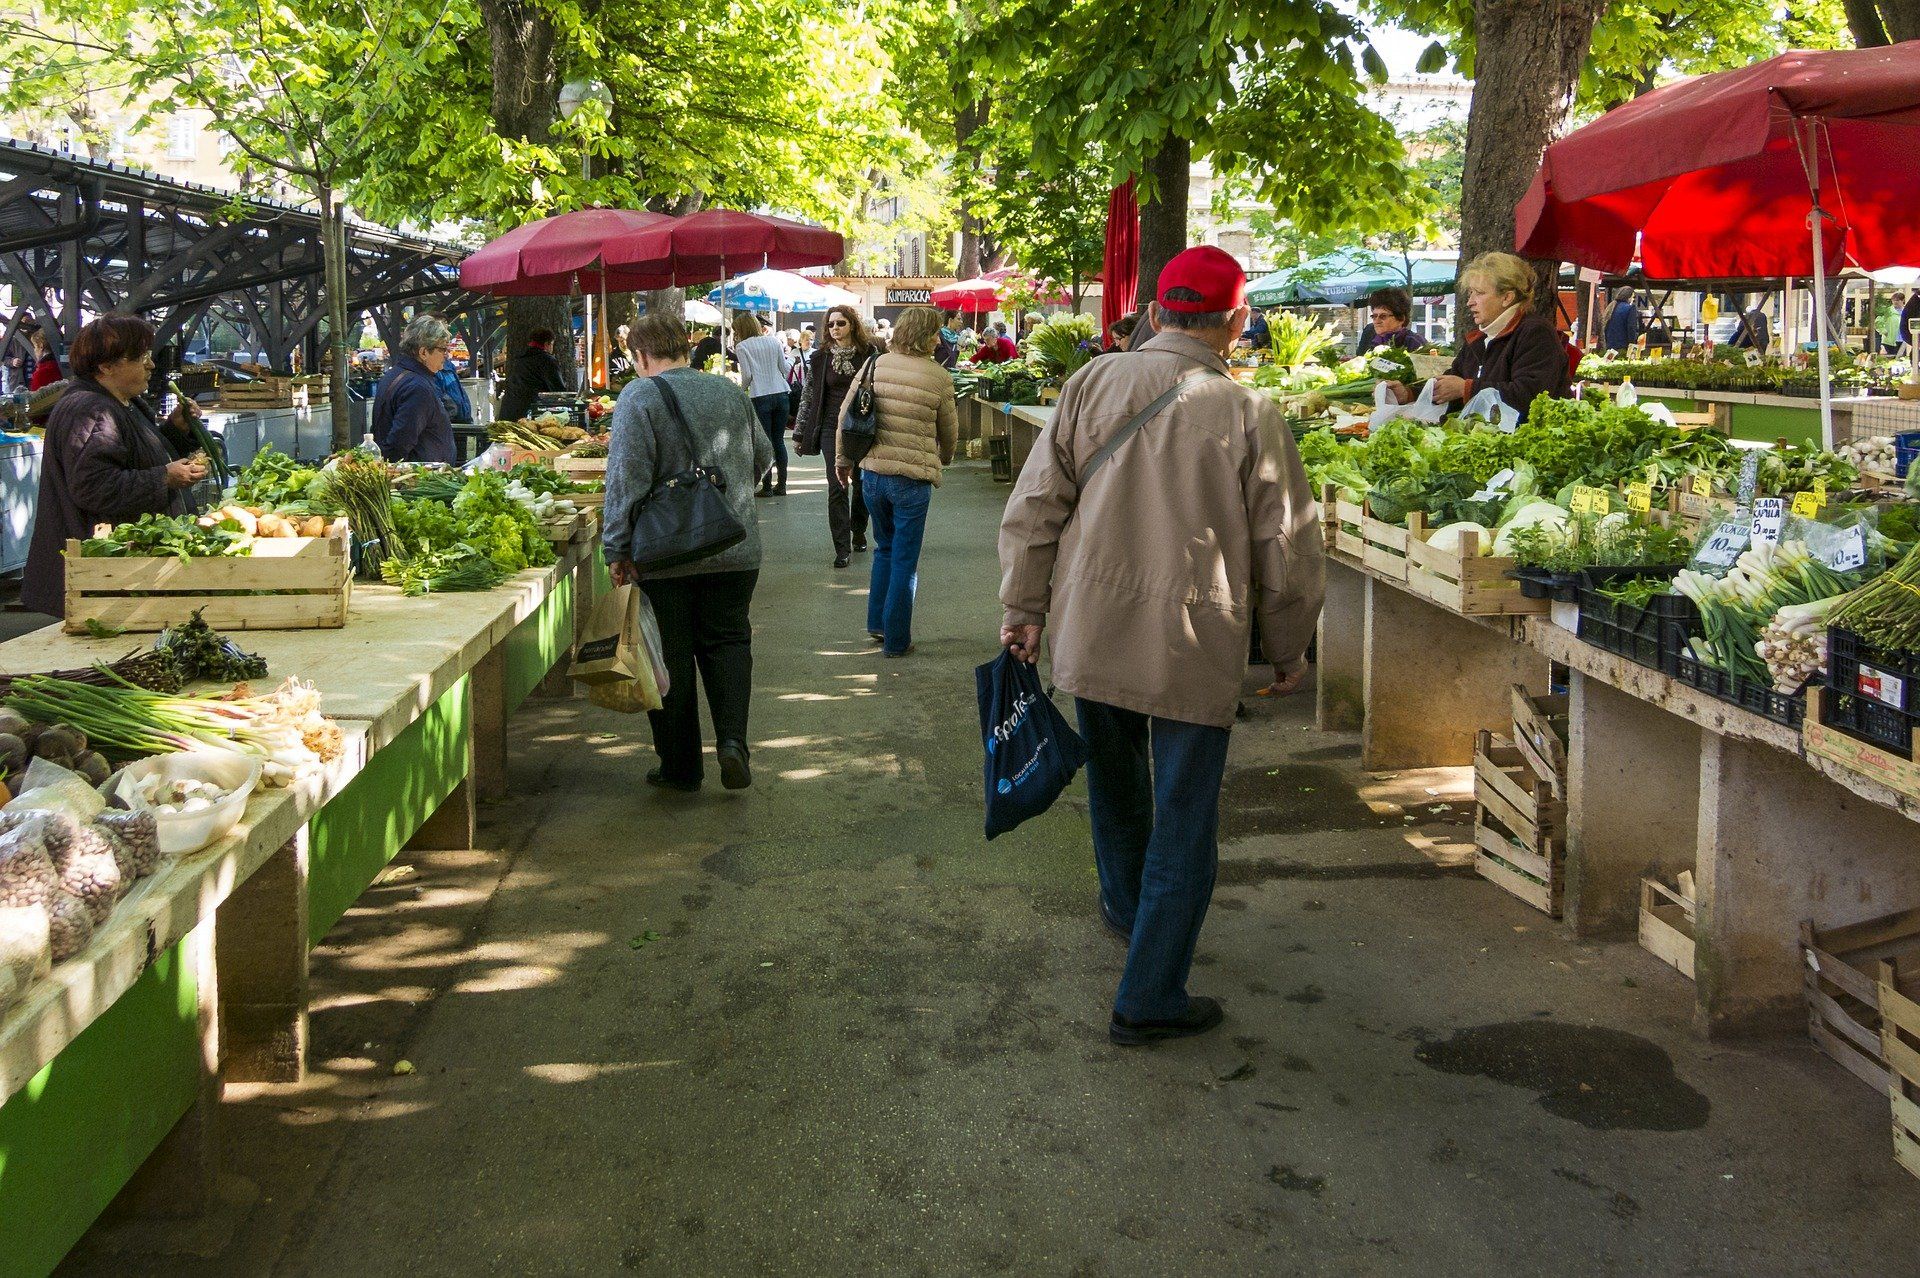 Mercado semanal donde se pueden adquirir alimentos / Foto: Martin Winkler - Pixabay